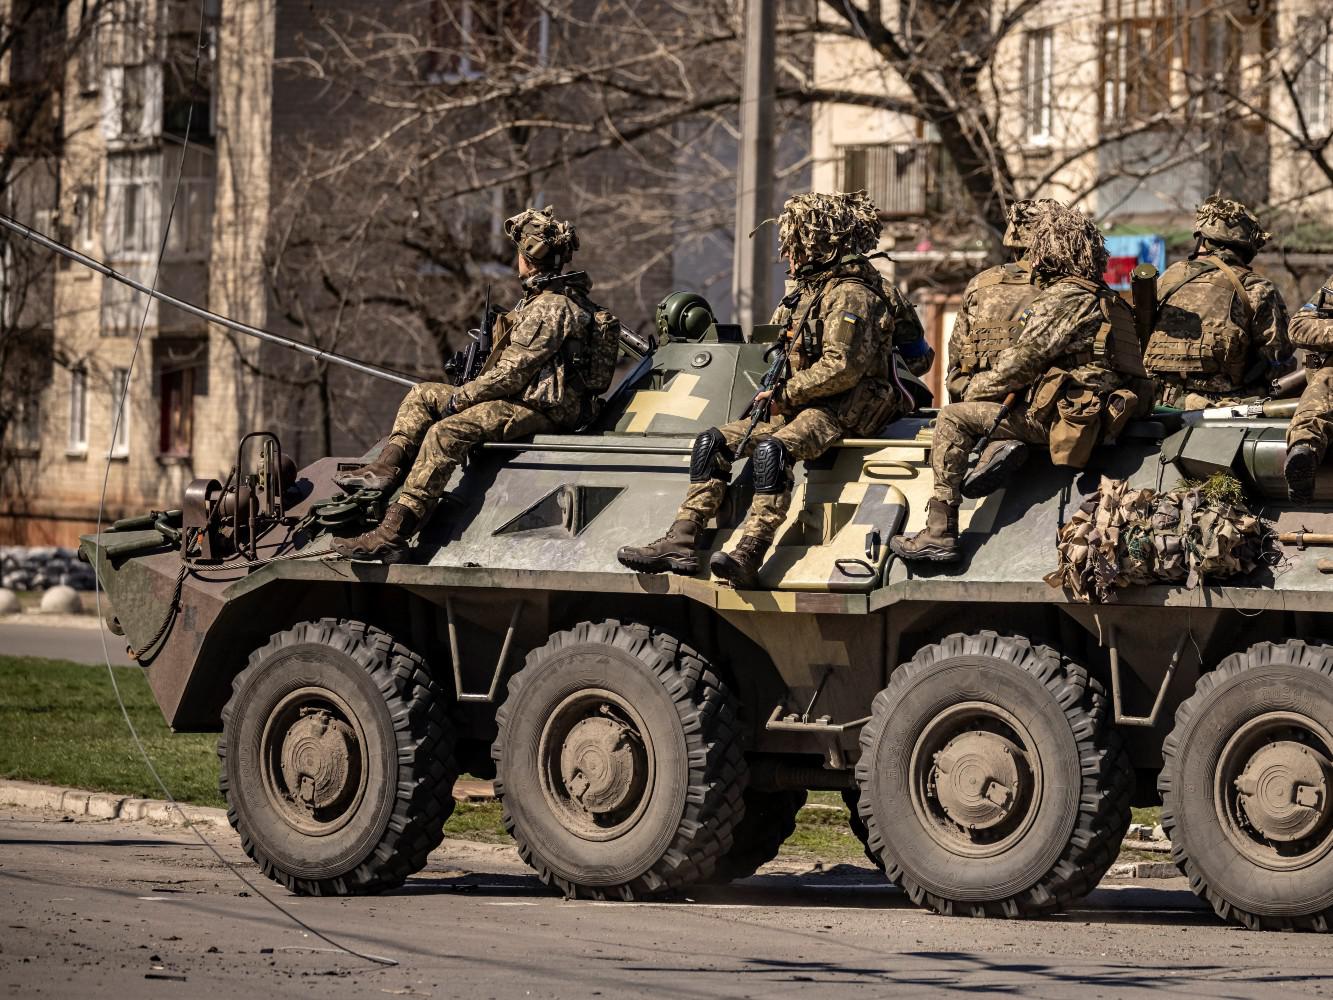 Guerra Ucraina, Belgorod denuncia: "Bombe Kiev nella regione russa"